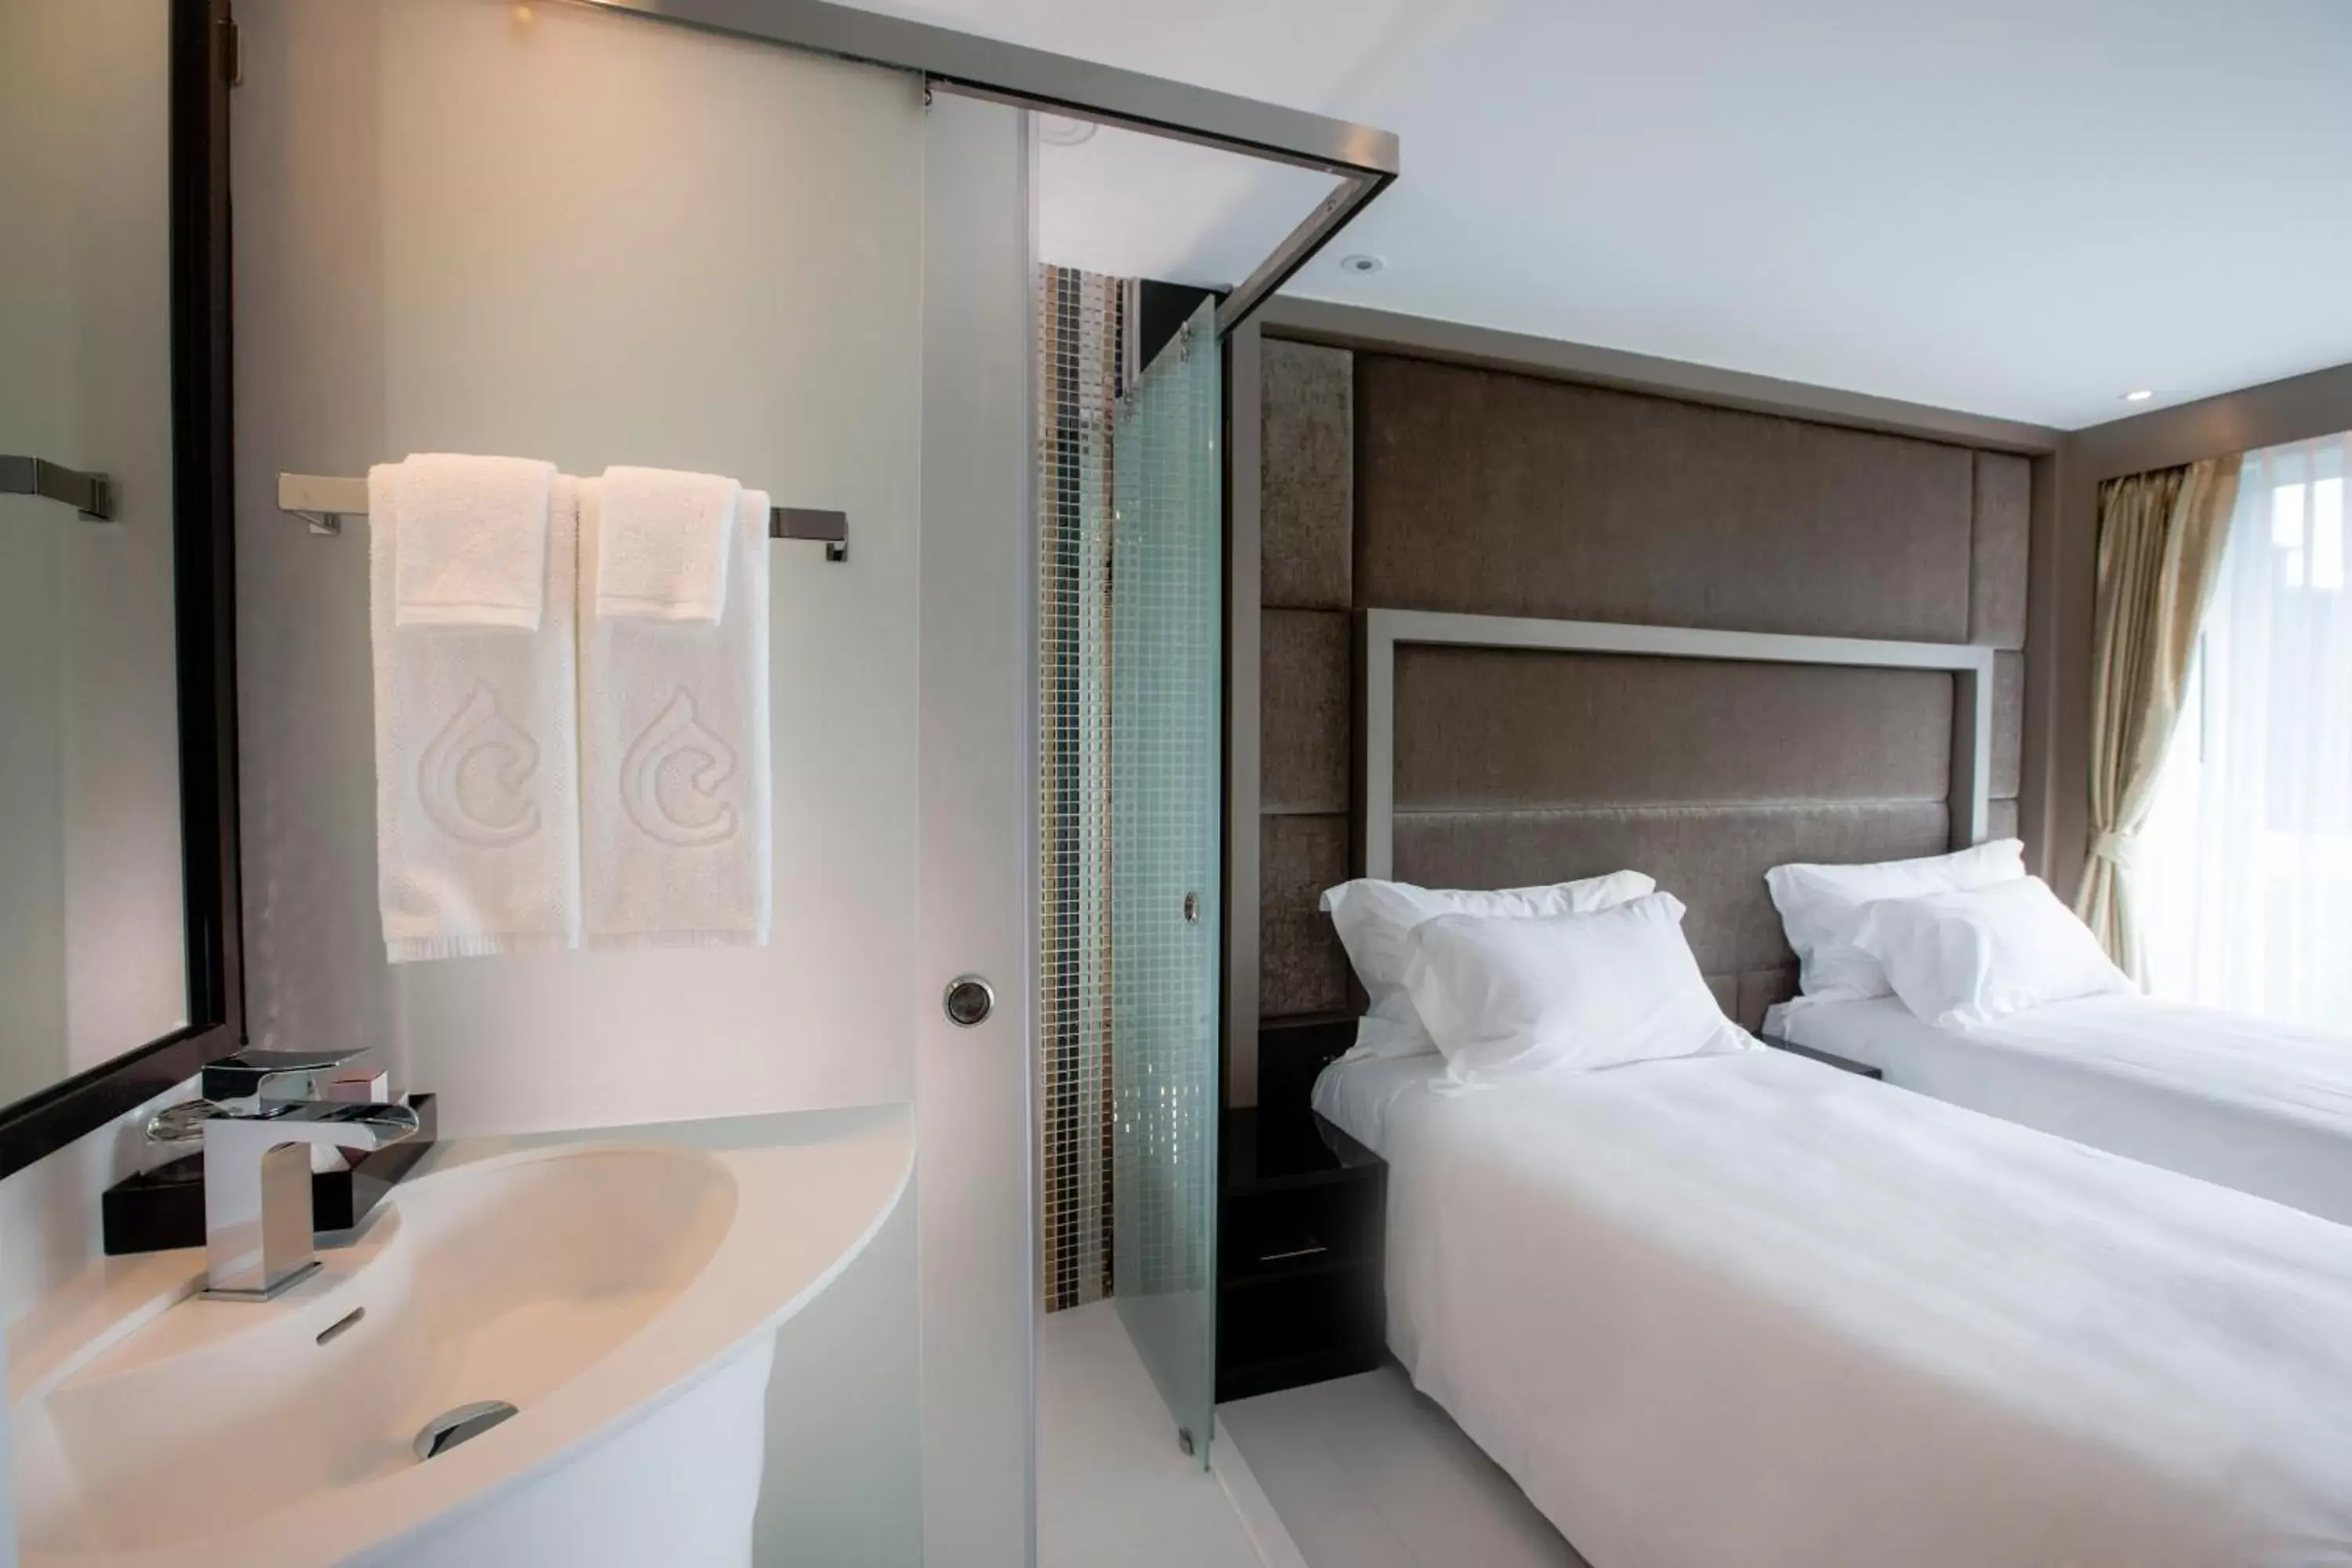 Photo of the whole room, Bathroom in Centara Azure Hotel Pattaya